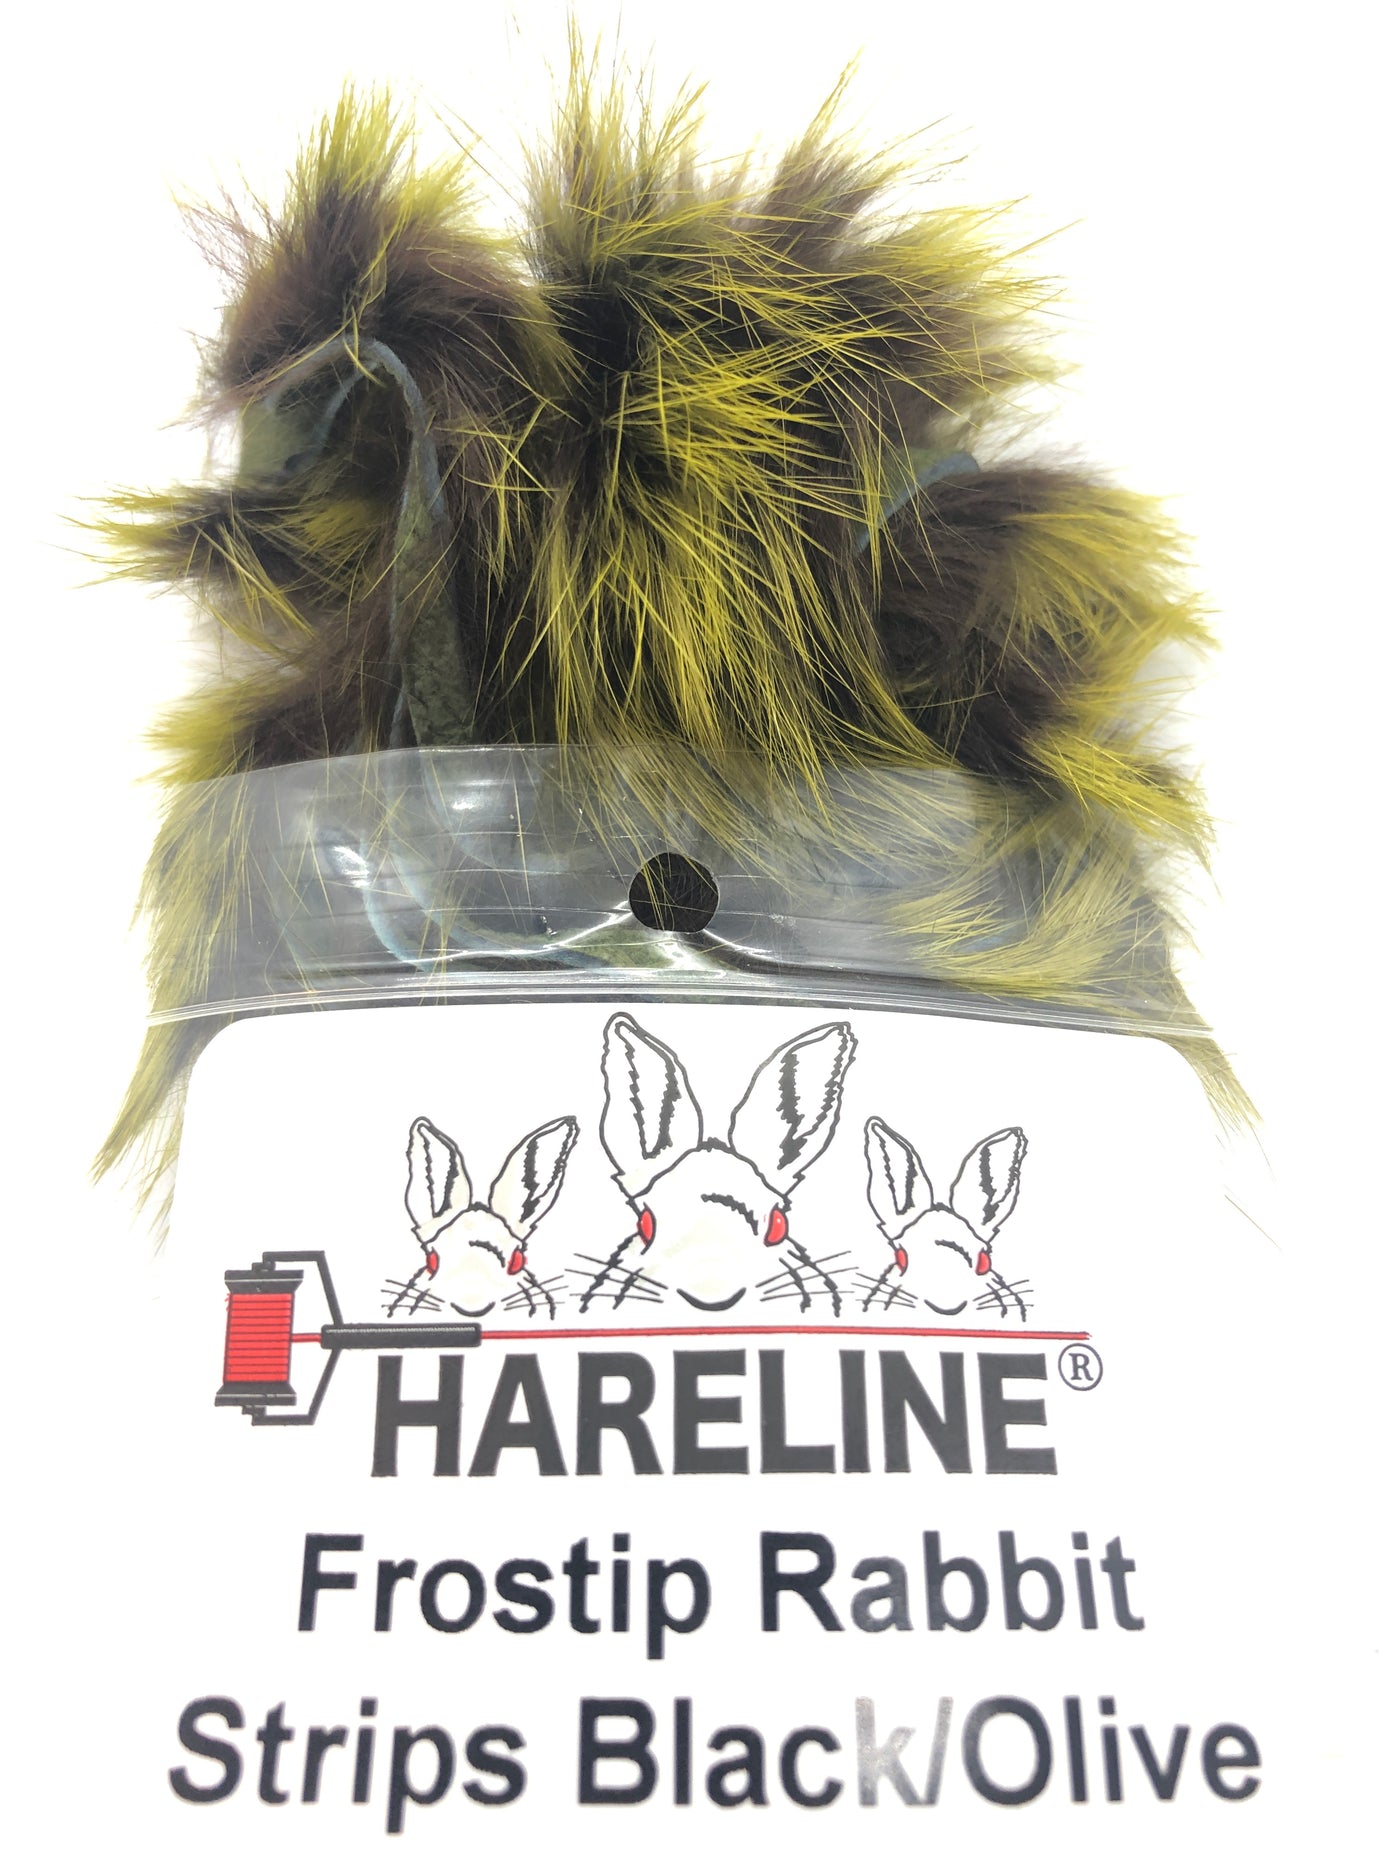 Hareline Frostip Rabbit Strips